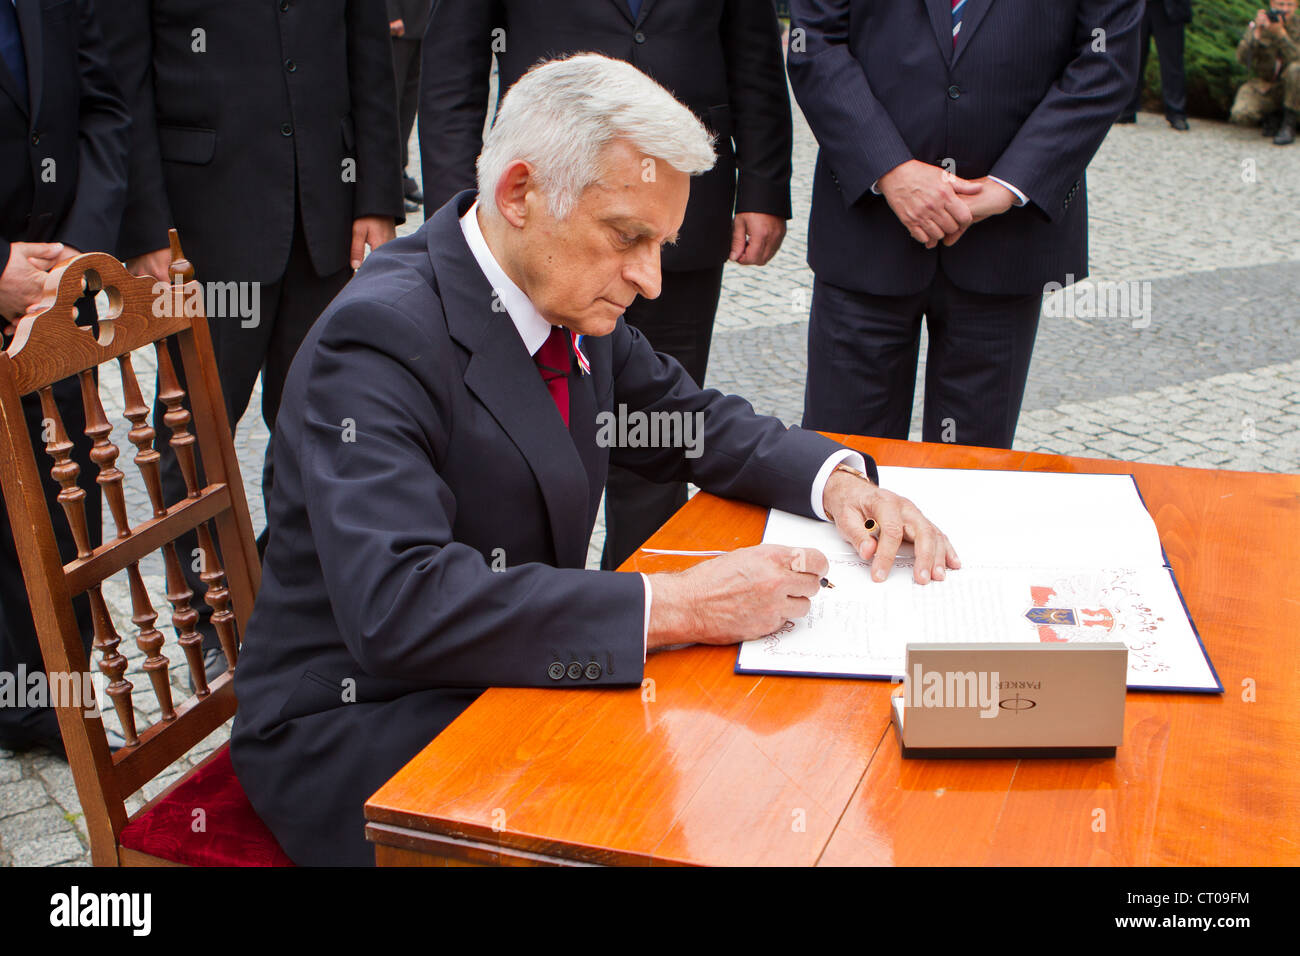 Jerzy Buzek - polnischer Politiker (2009-2012 Präsident des Europäischen Parlaments). Stockfoto